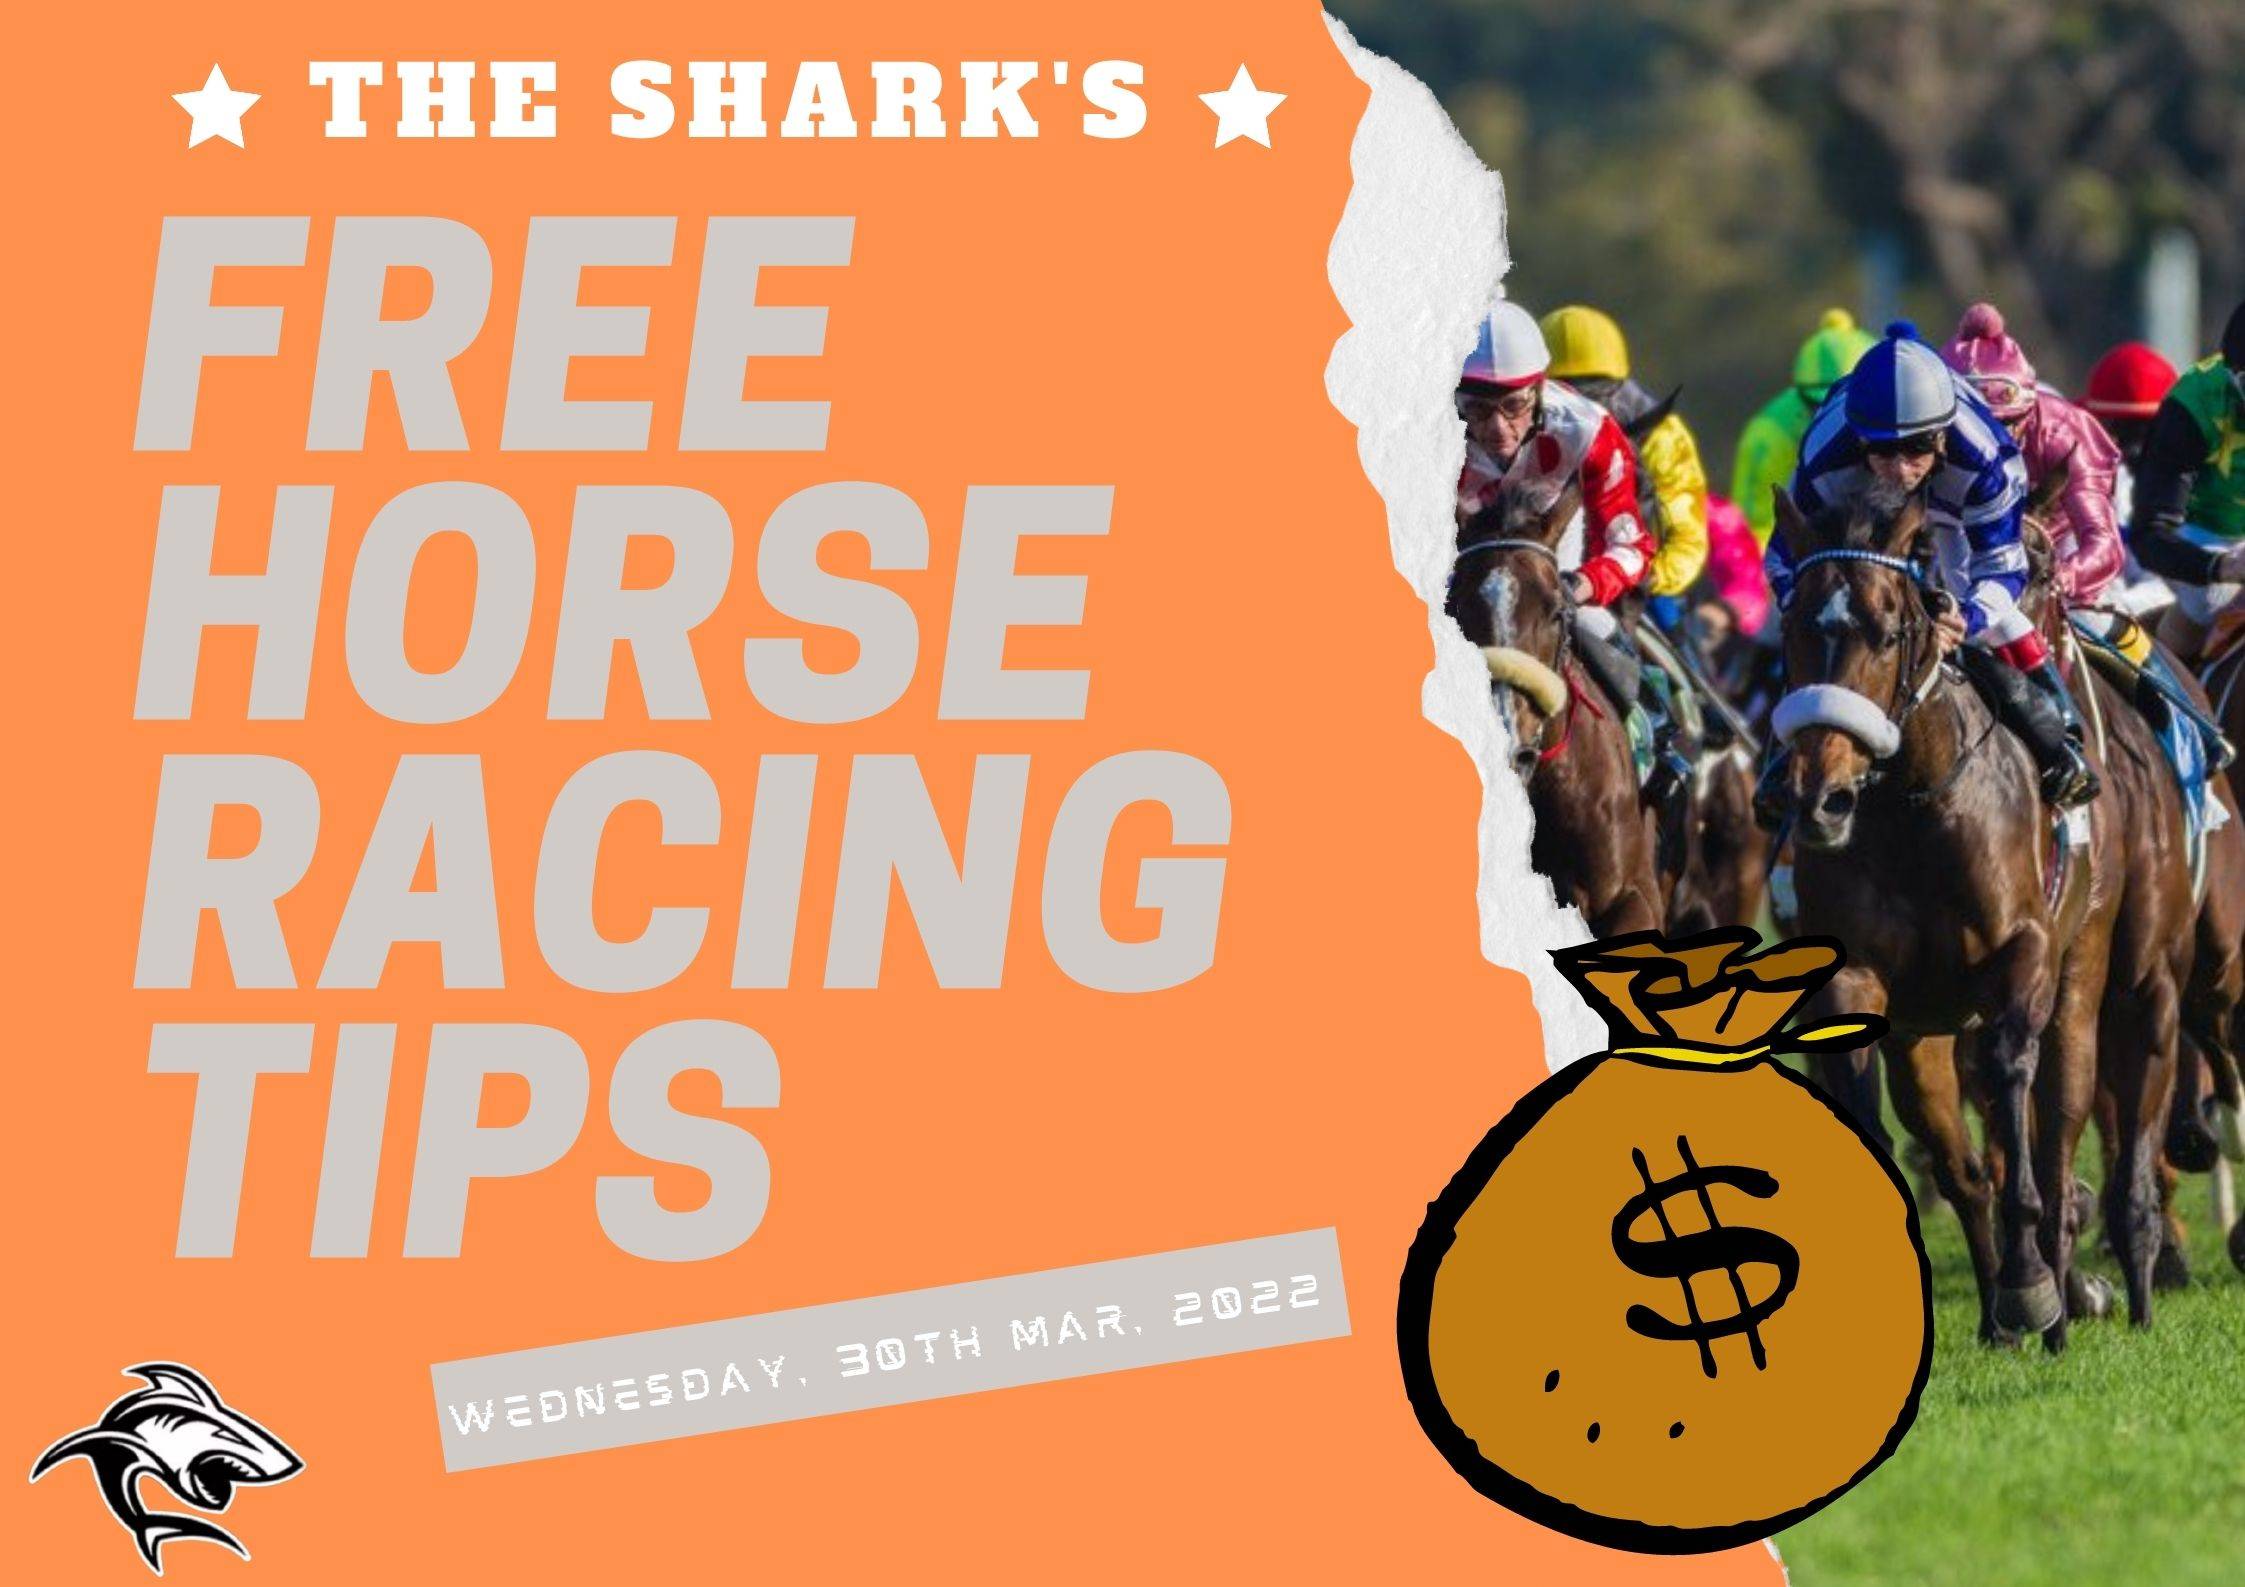 Free Horse Racing Tips - 30th Mar